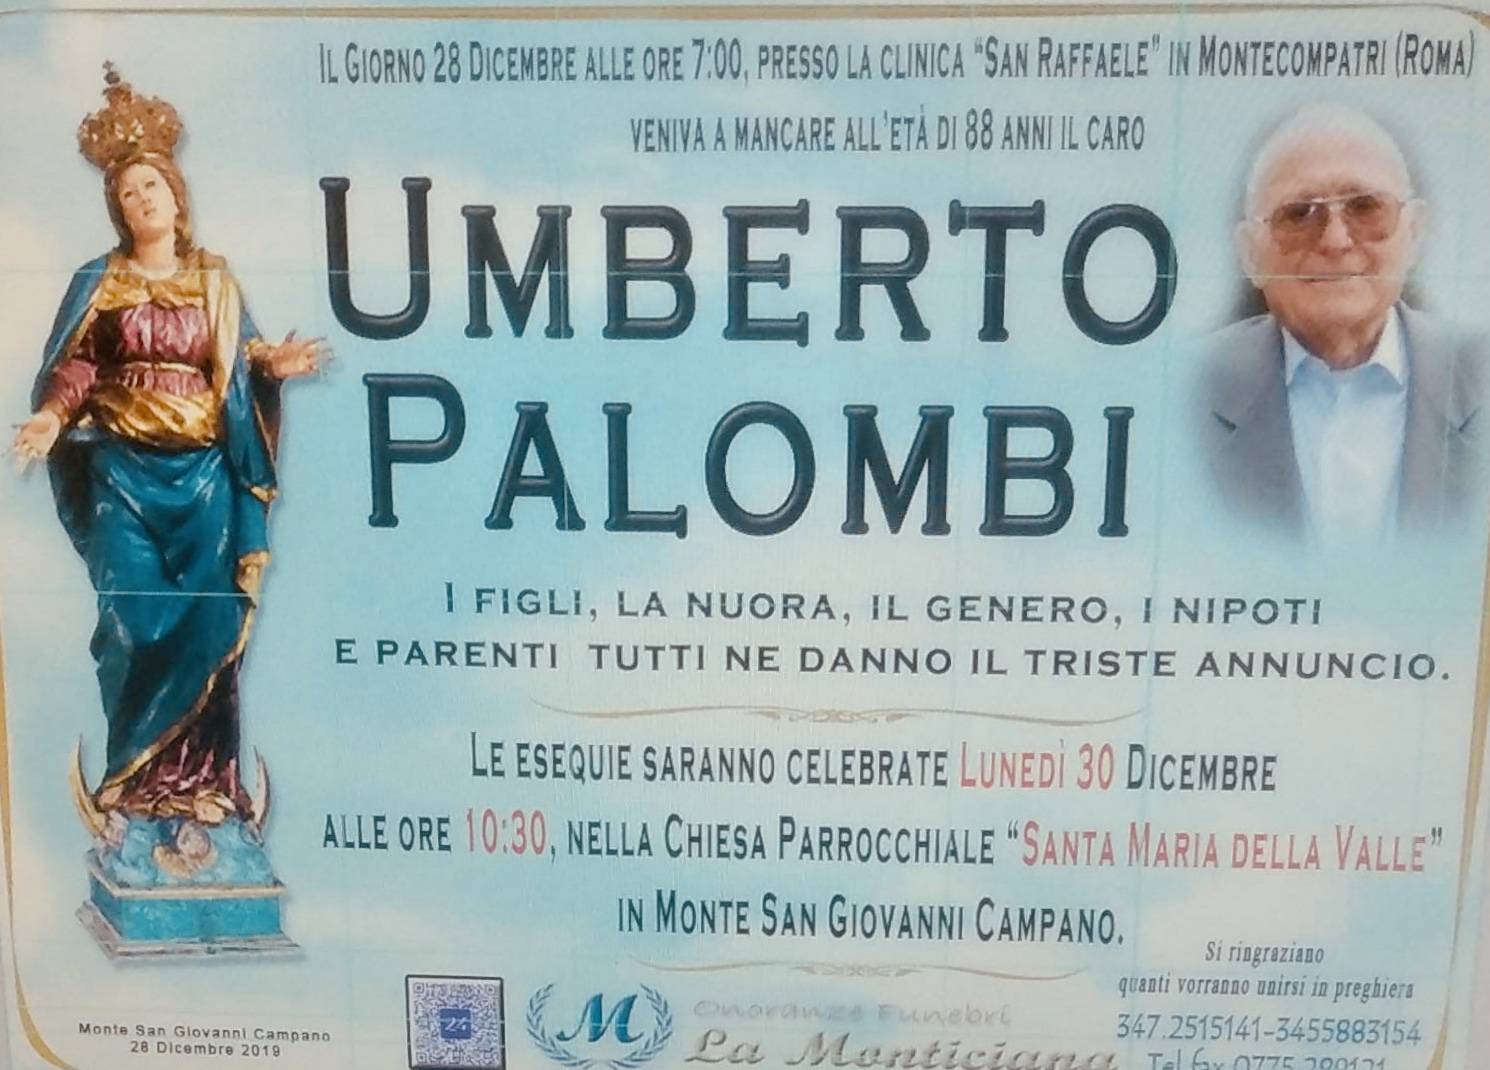 Umberto Palombi